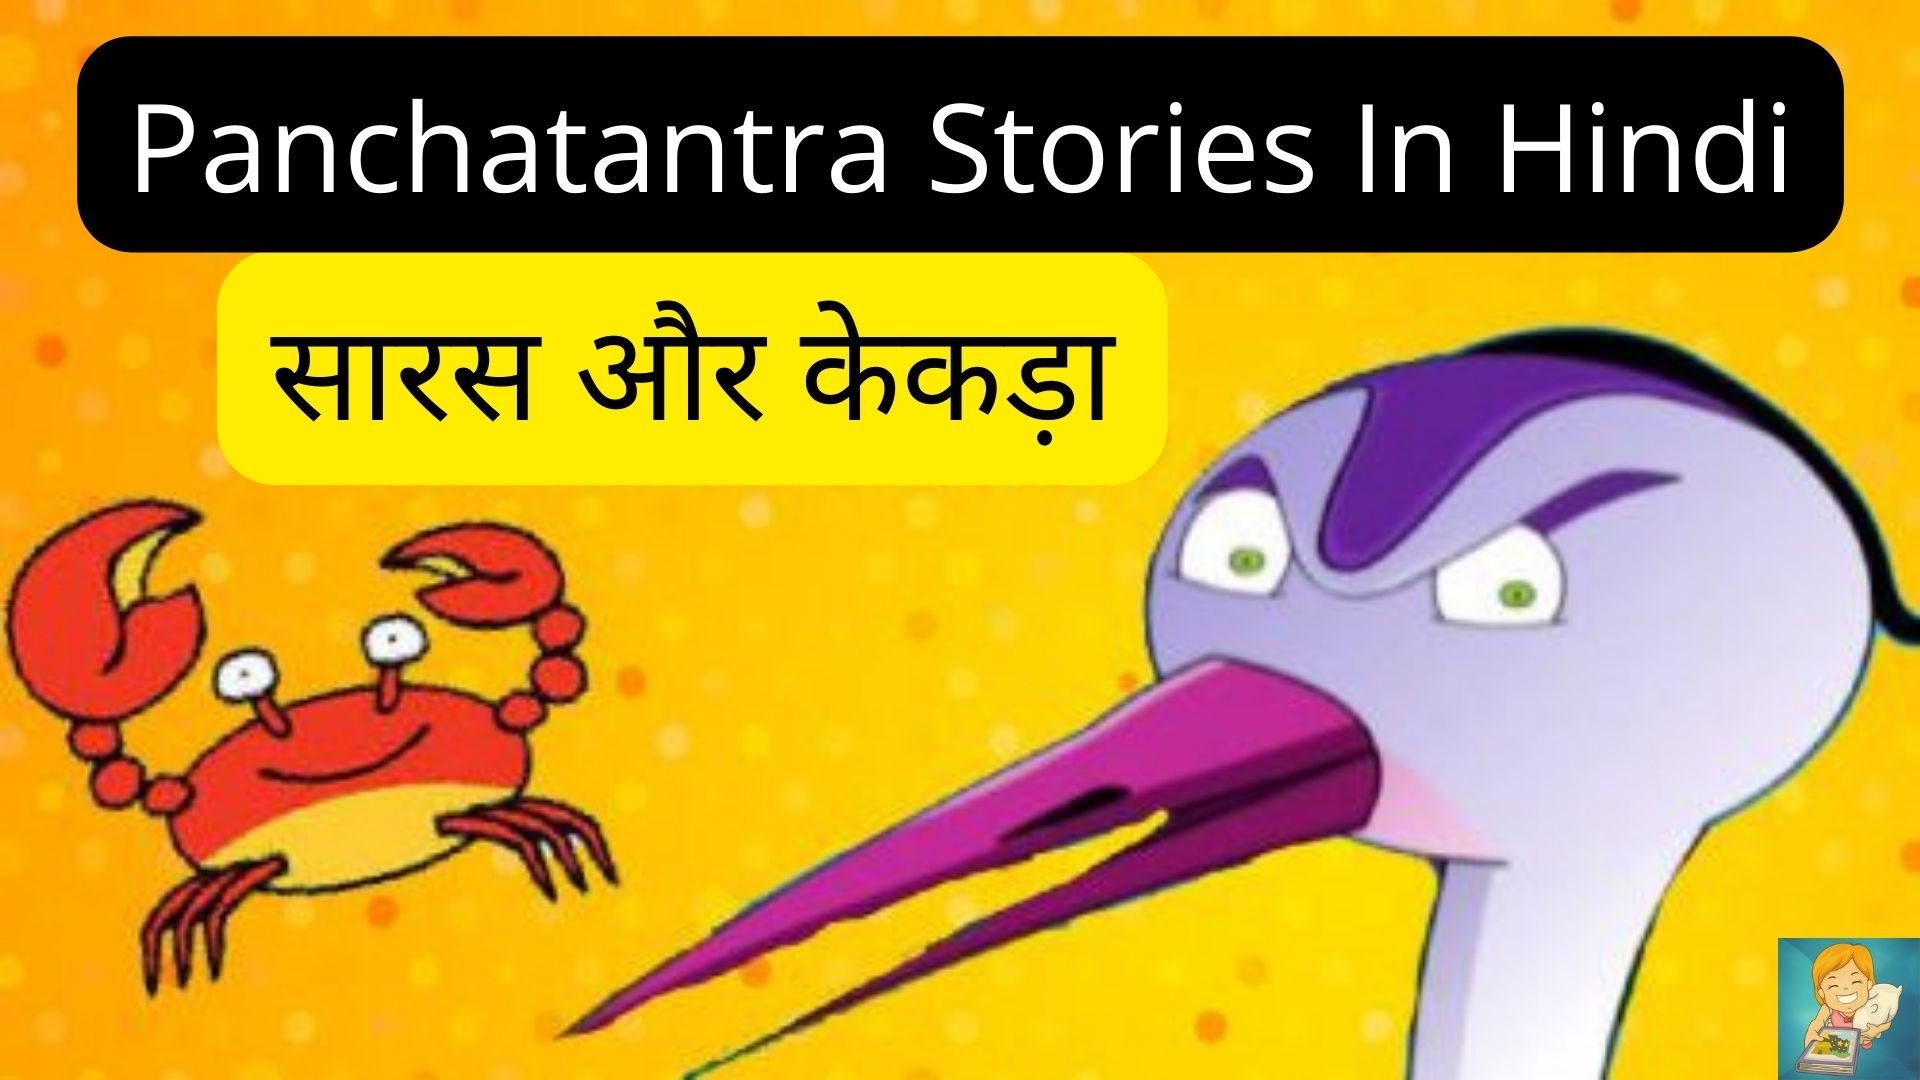 crane and crab story in hindi